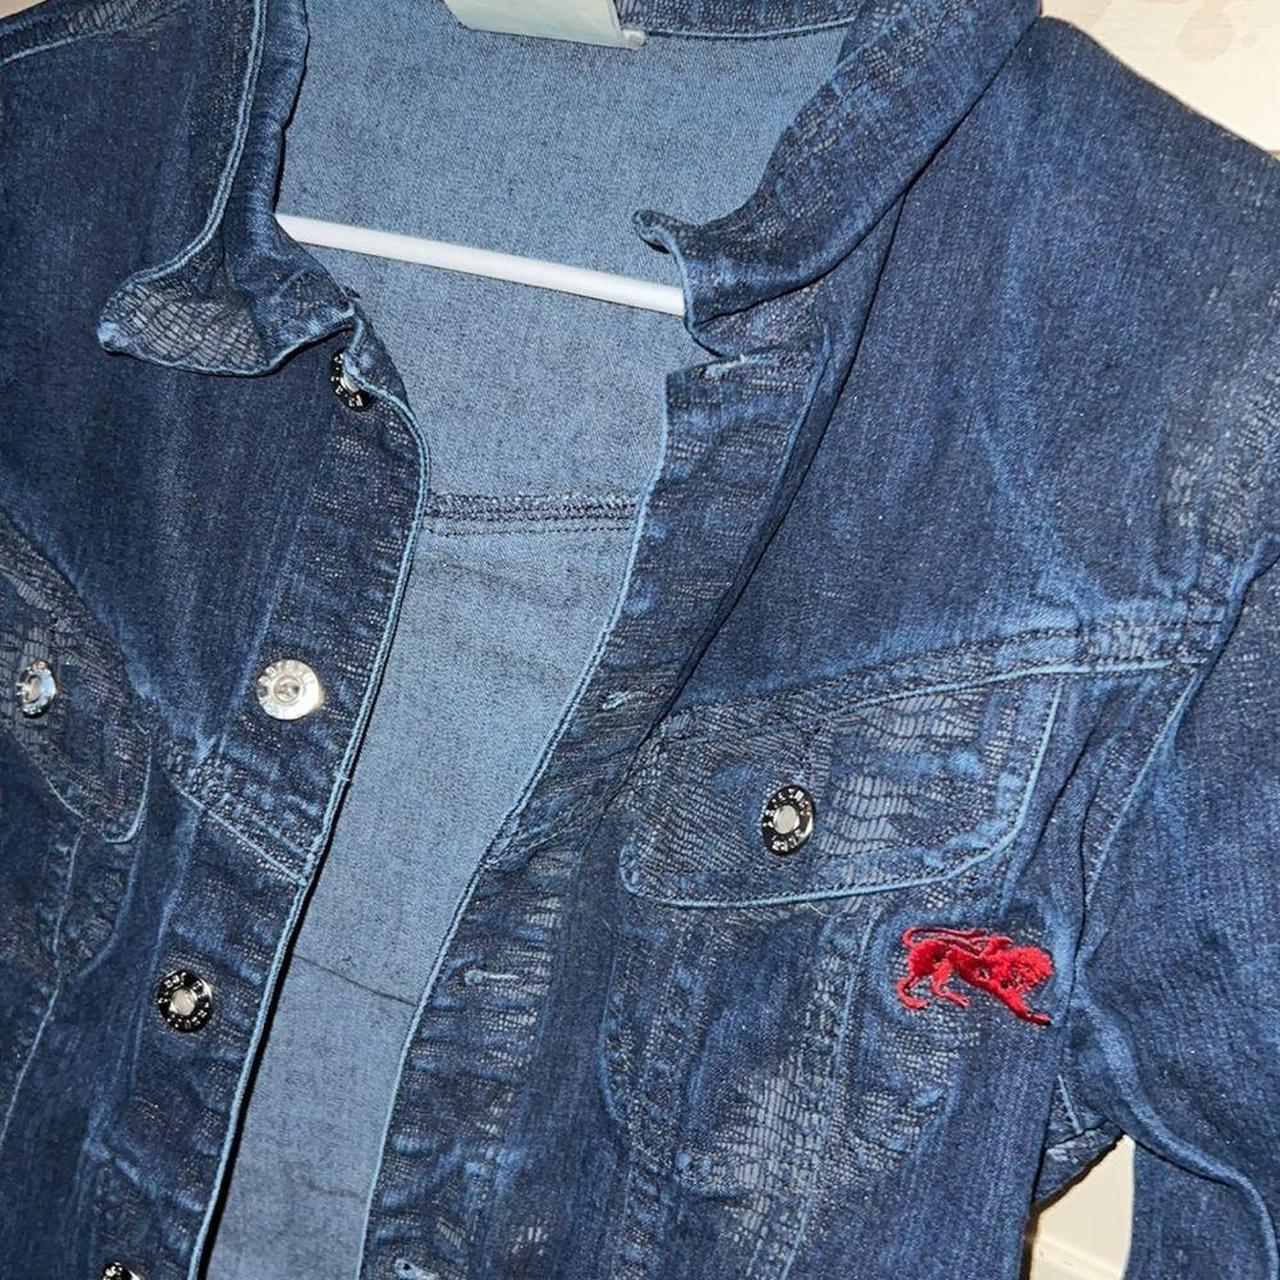 Product Image 3 - Parasuco jeans Denim jacket, features